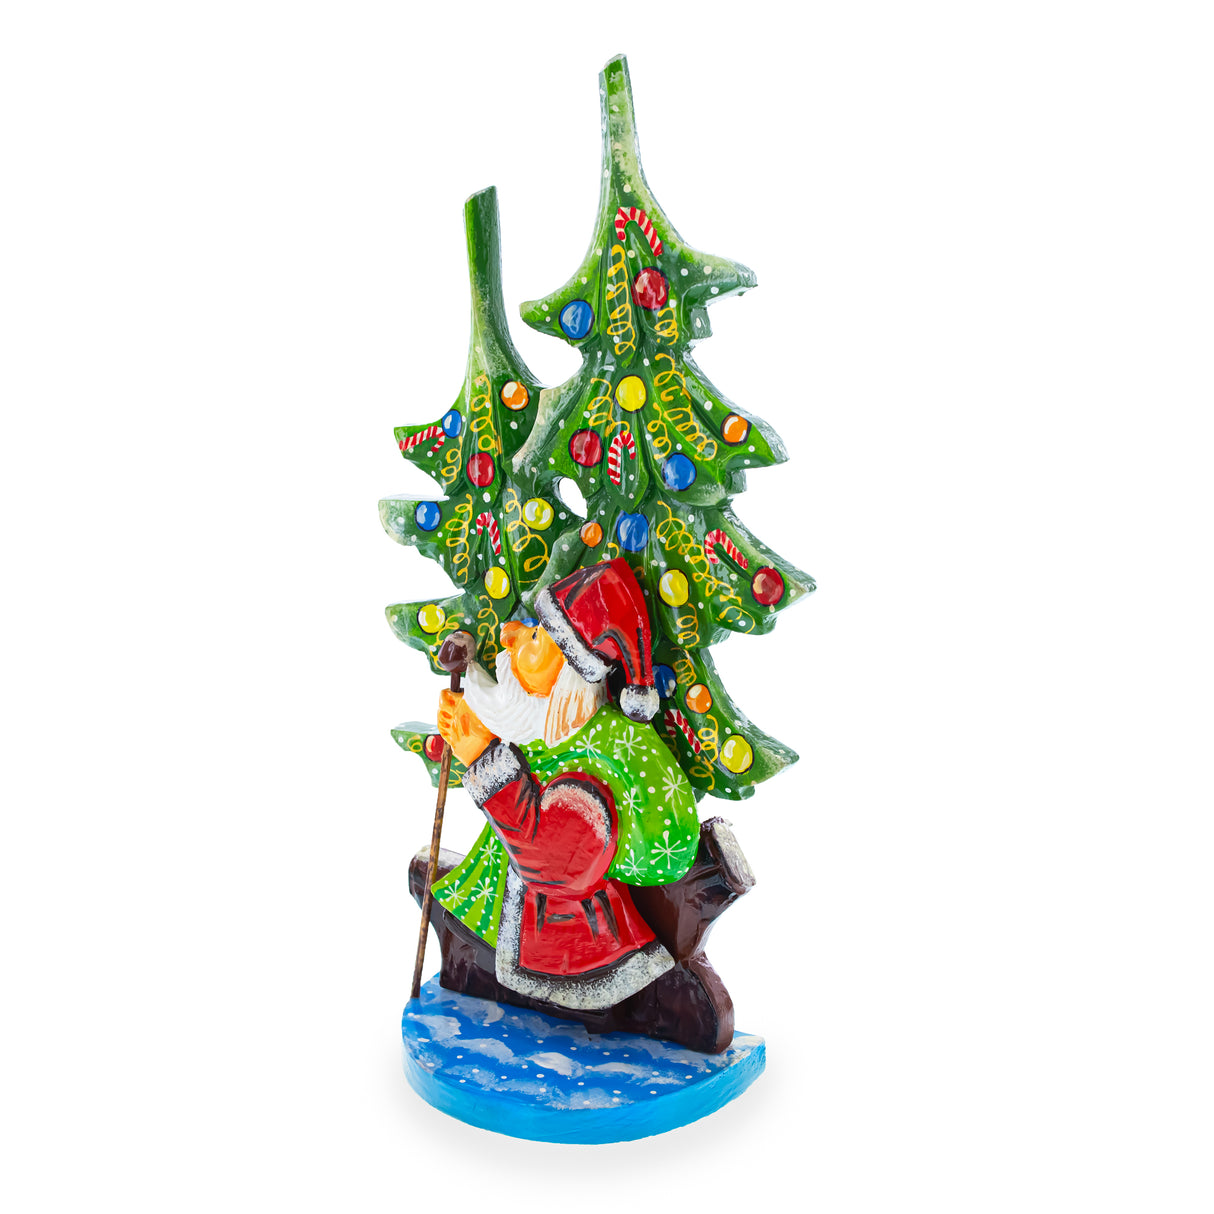 Buy Christmas Decor Carved Wooden Santa by BestPysanky Online Gift Ship